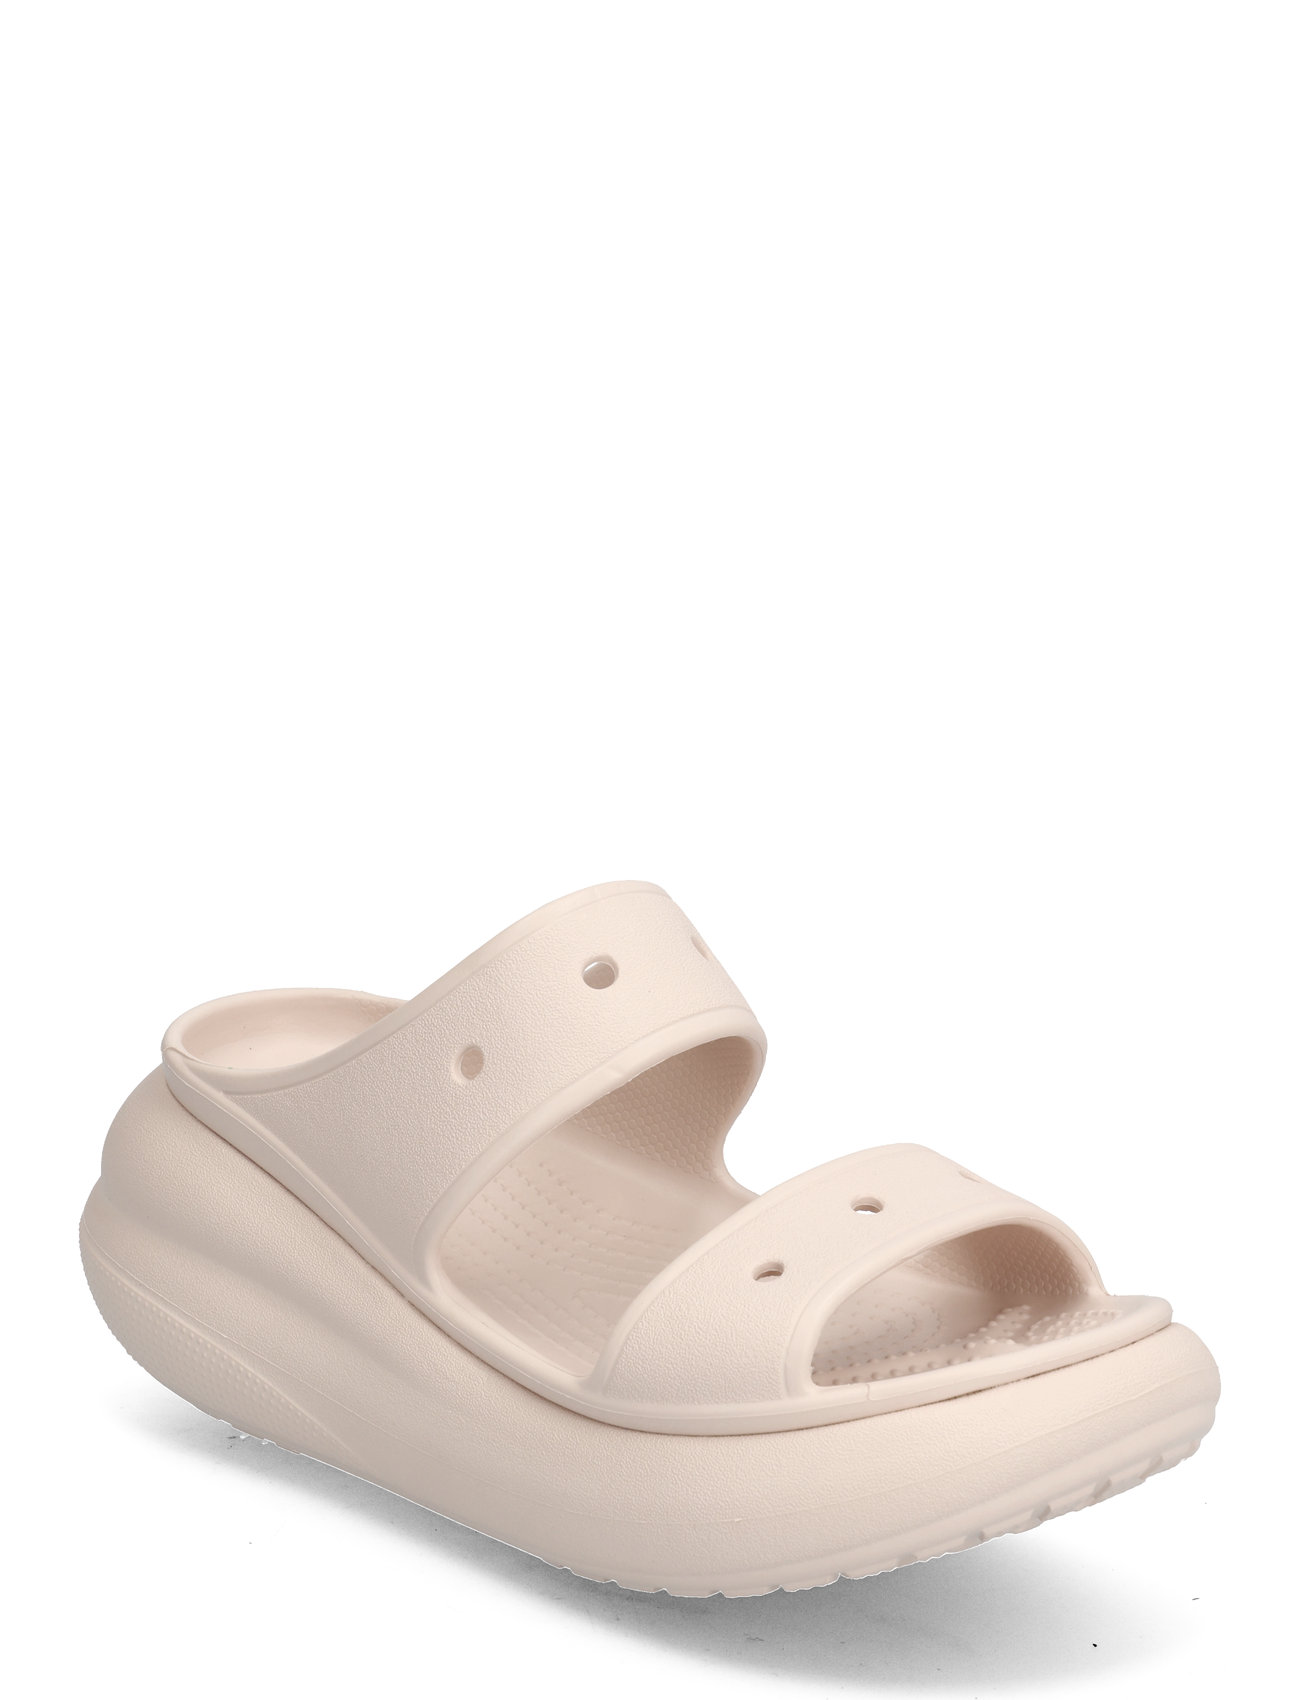 Crush Sandal Shoes Clogs Cream Crocs